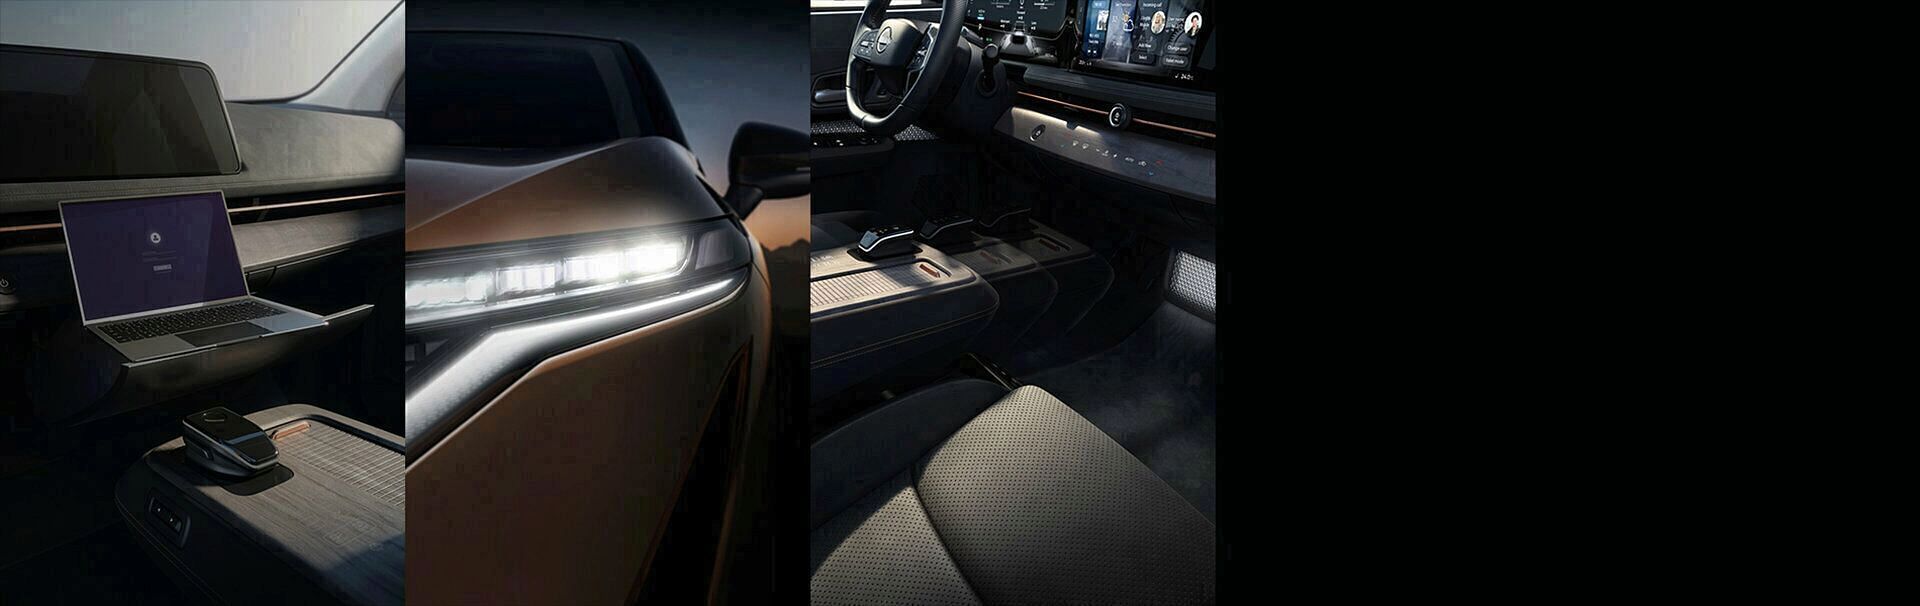 Interior and head light image of the Nissan Ariya.